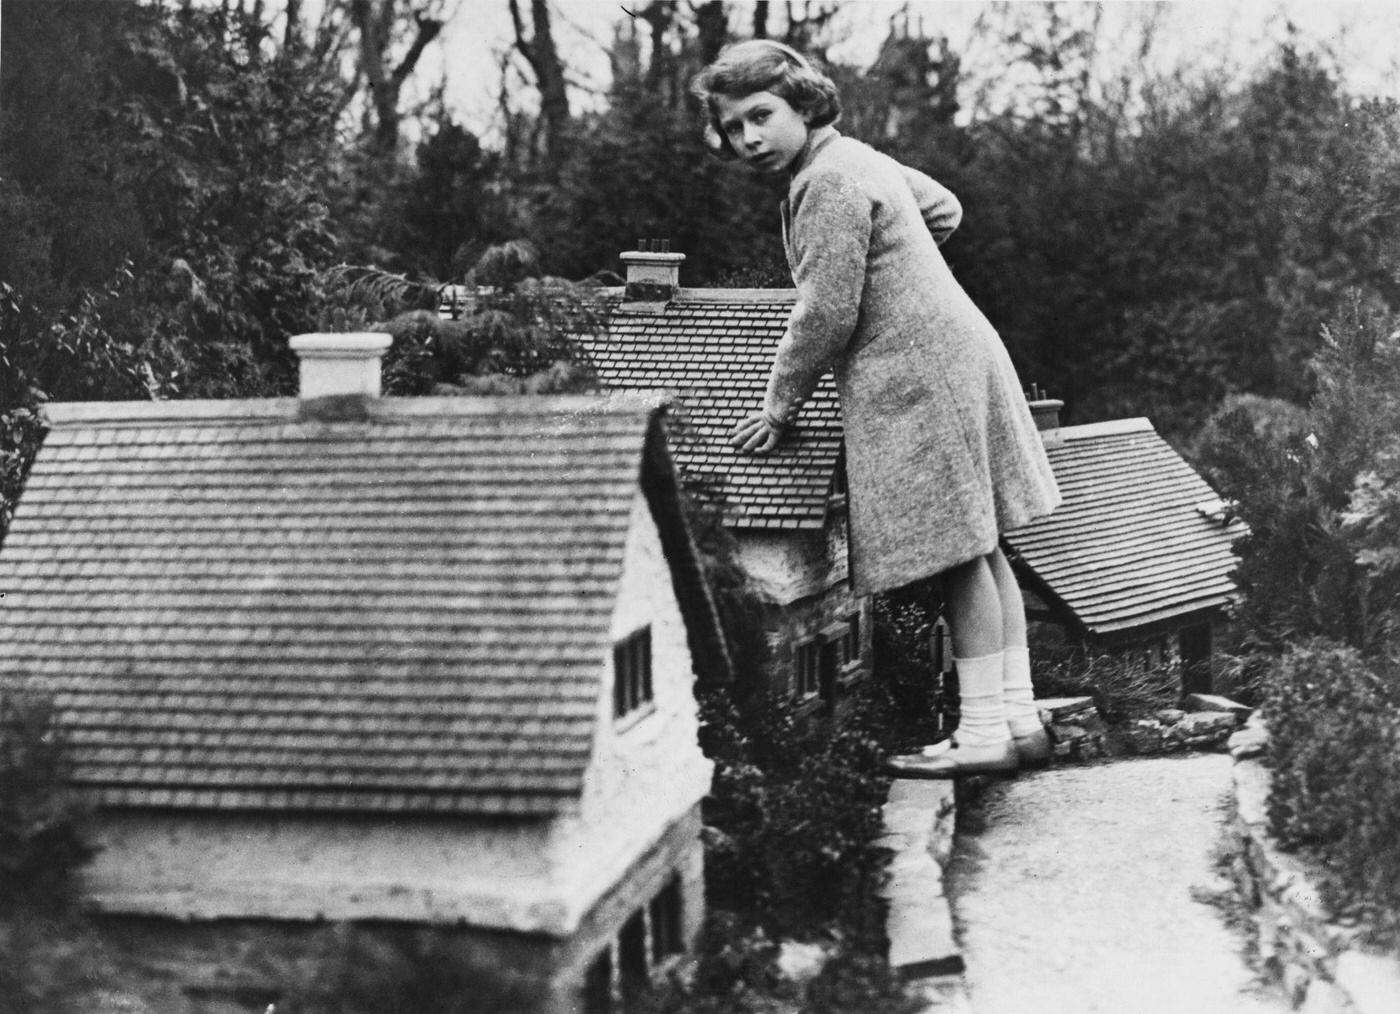 Princess Elizabeth visits Bekonscot model village near Beaconsfield, Buckinghamshire in England in 1936.